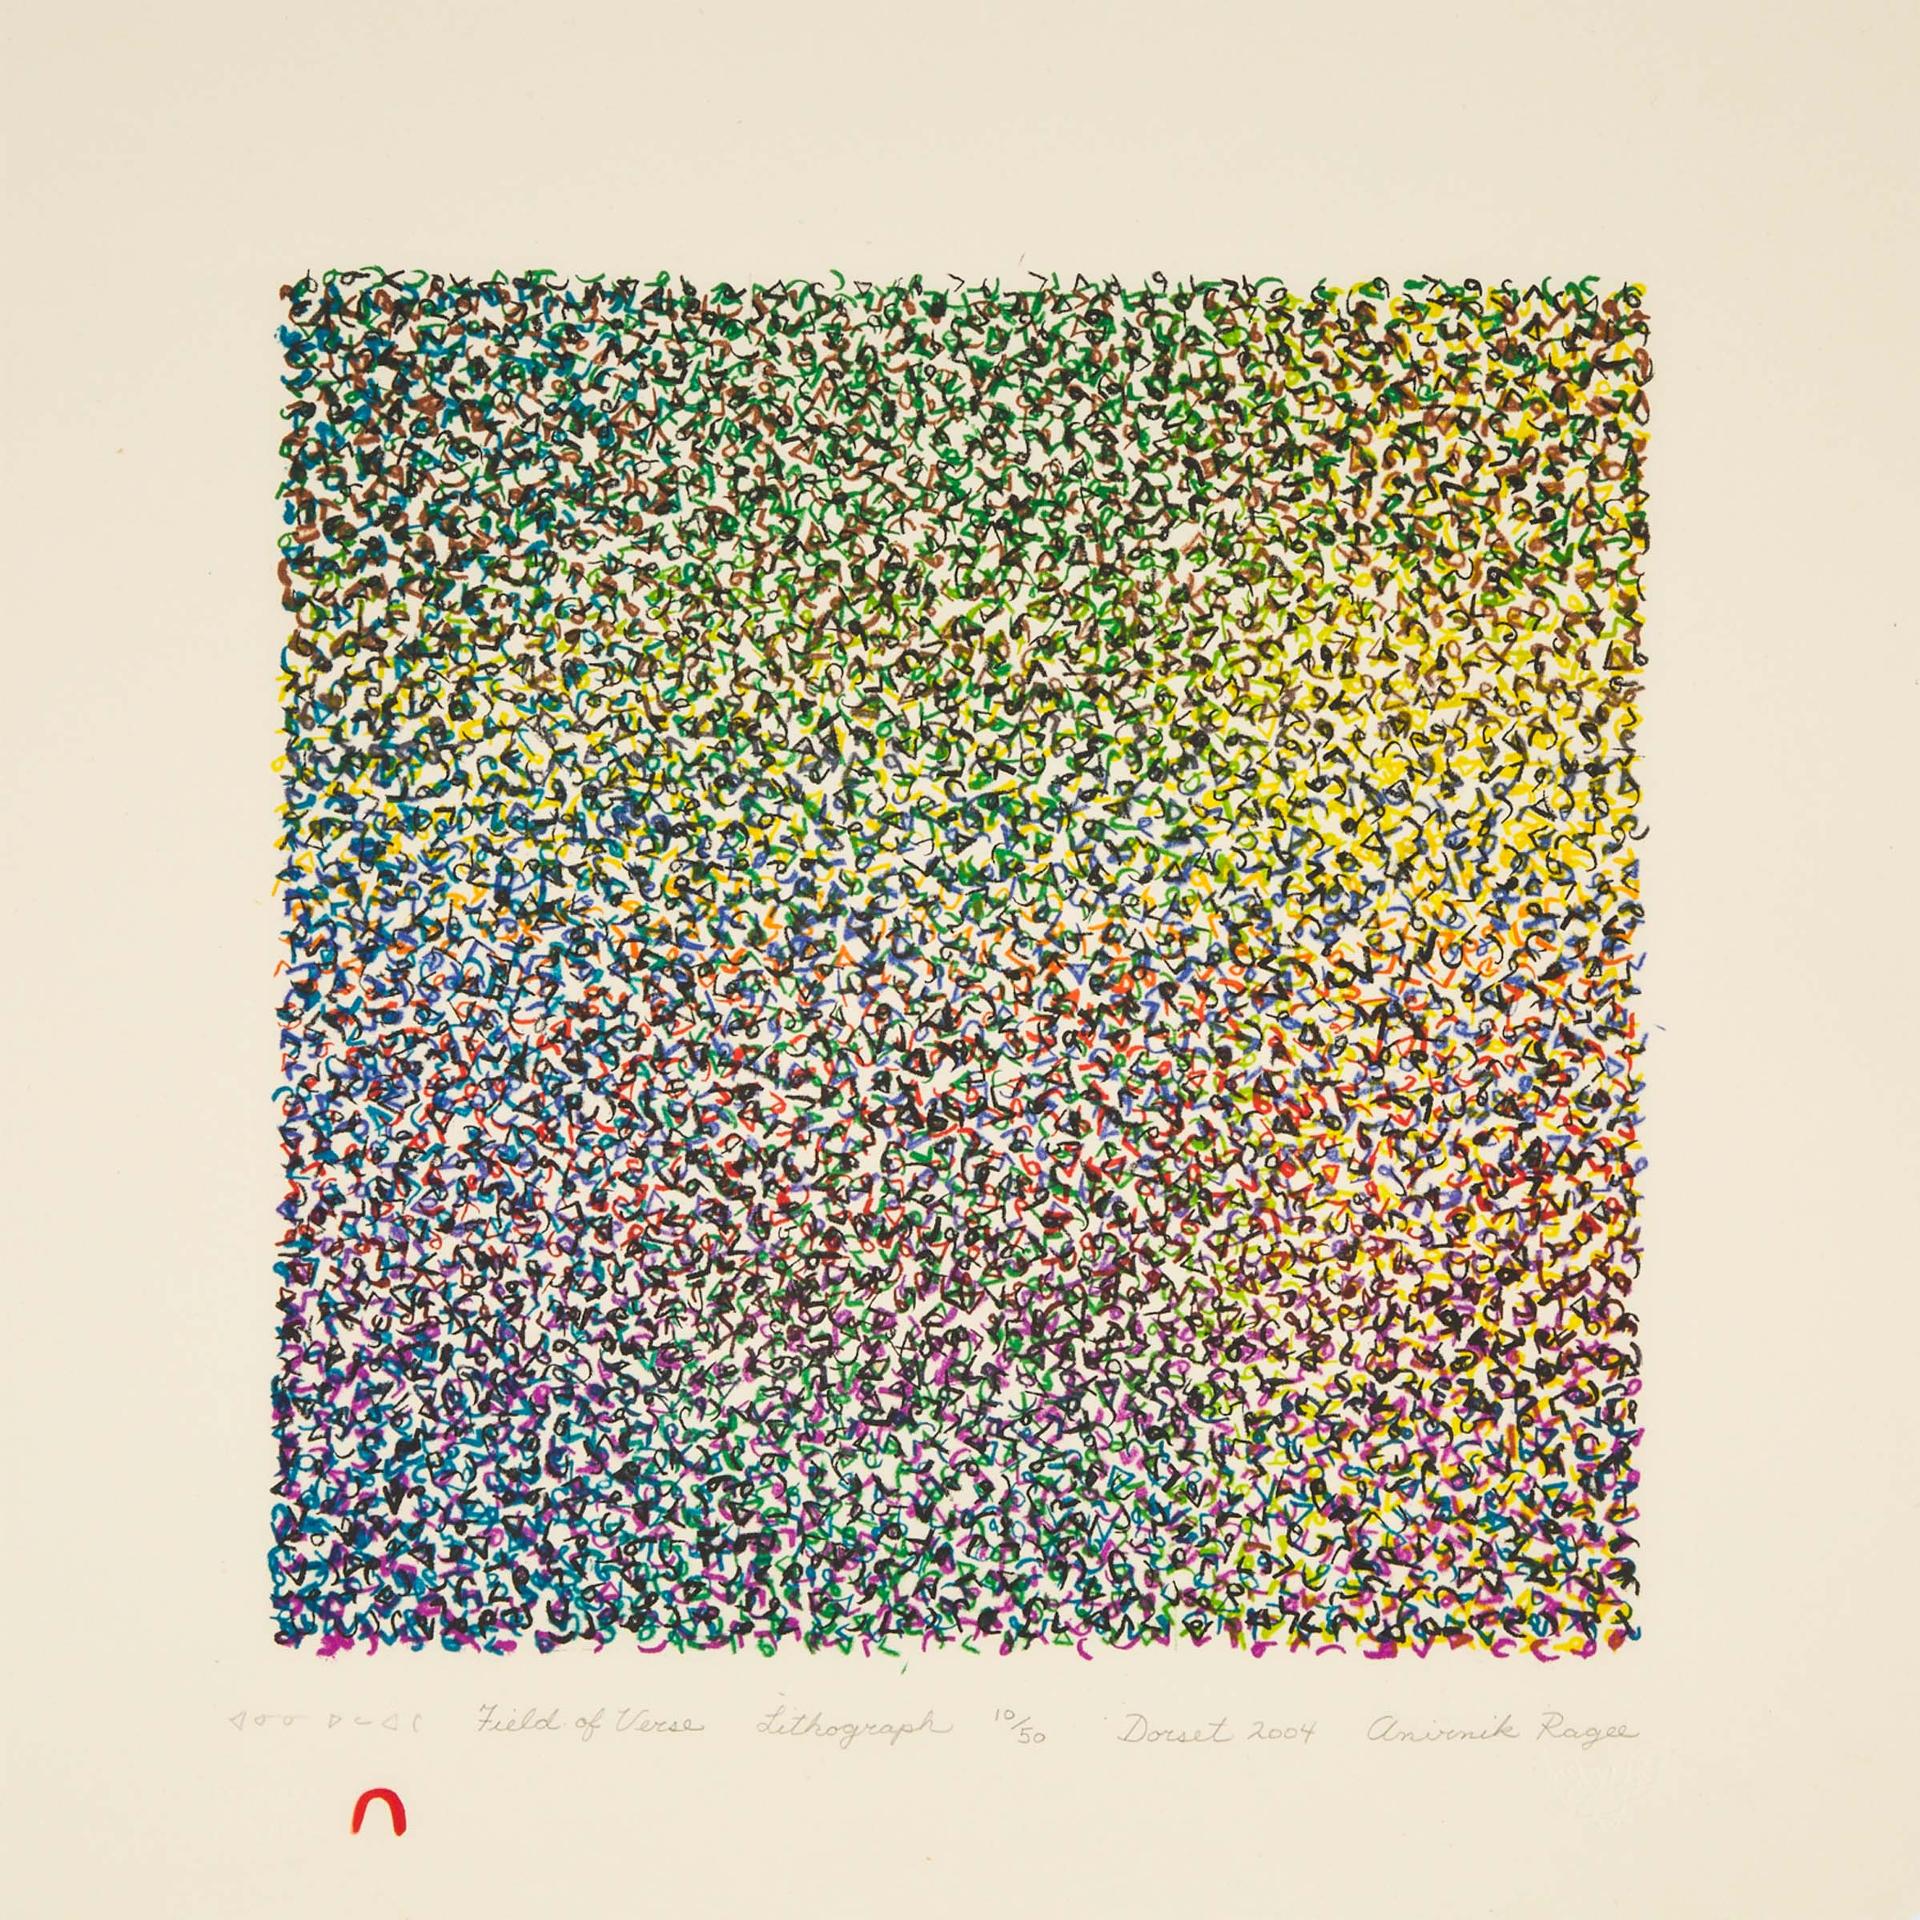 Anirnik Ragee (1935) - Field Of Verse, 2004